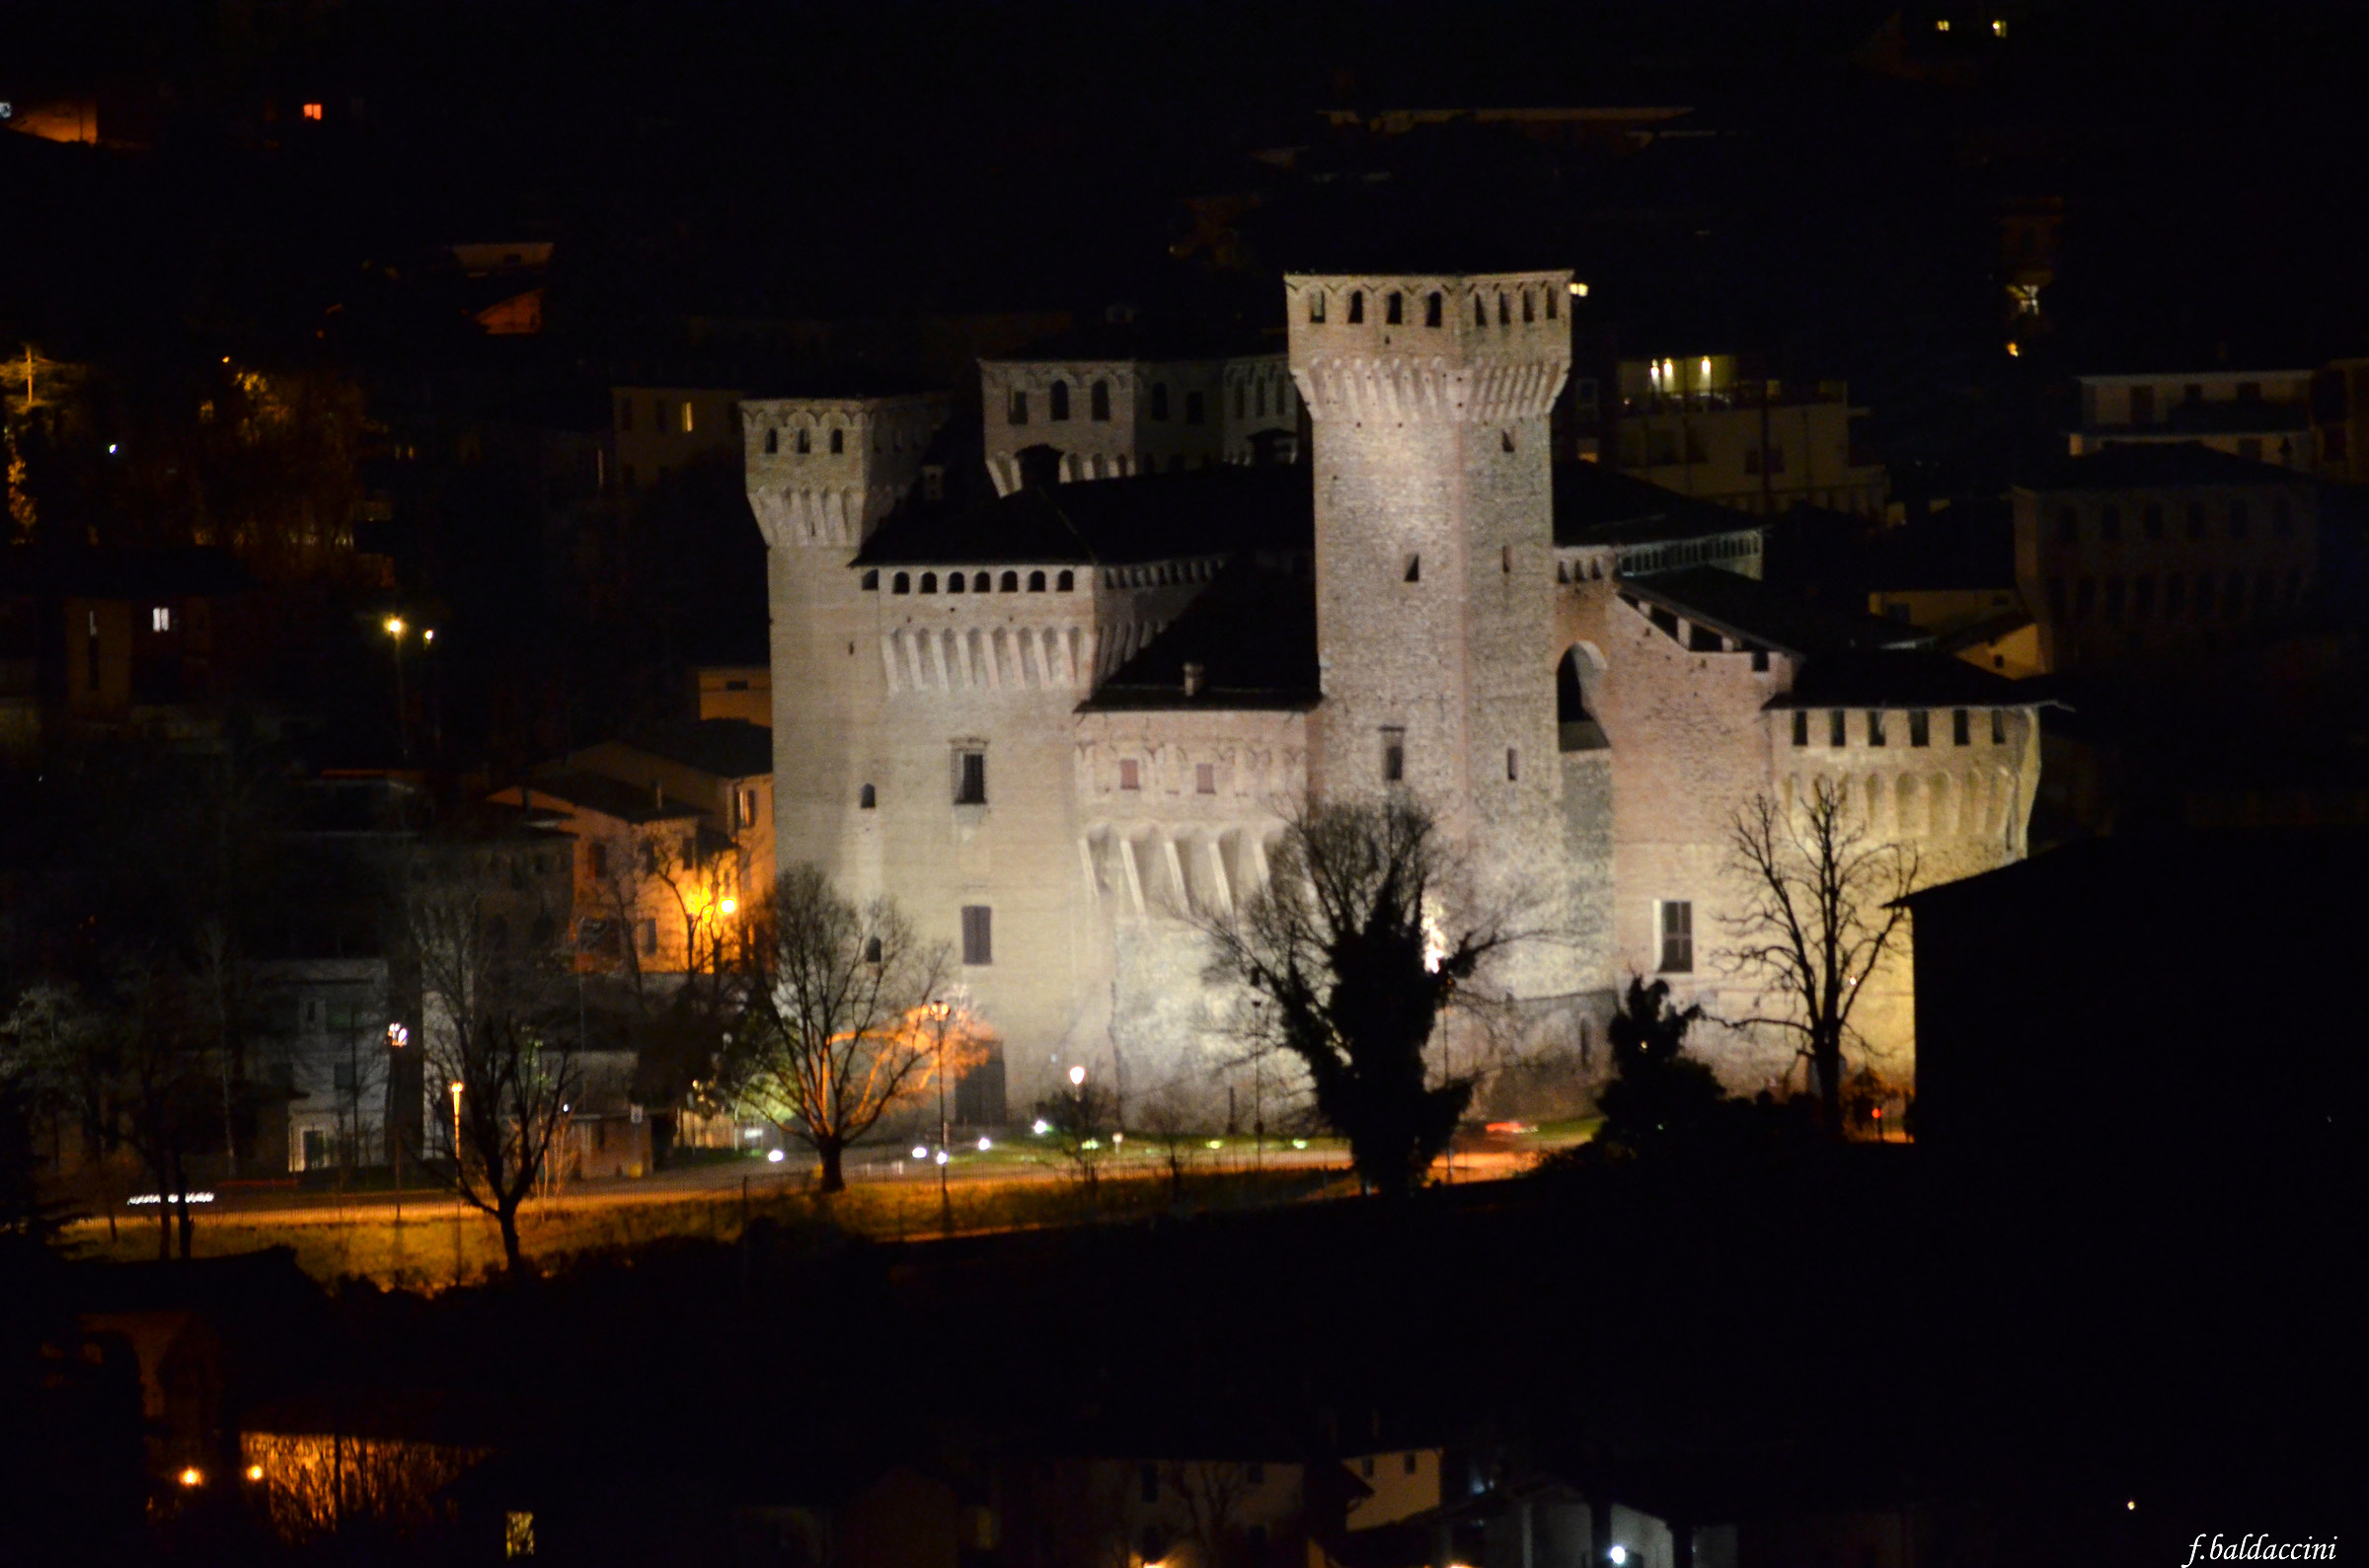 The Castle of Vignola...